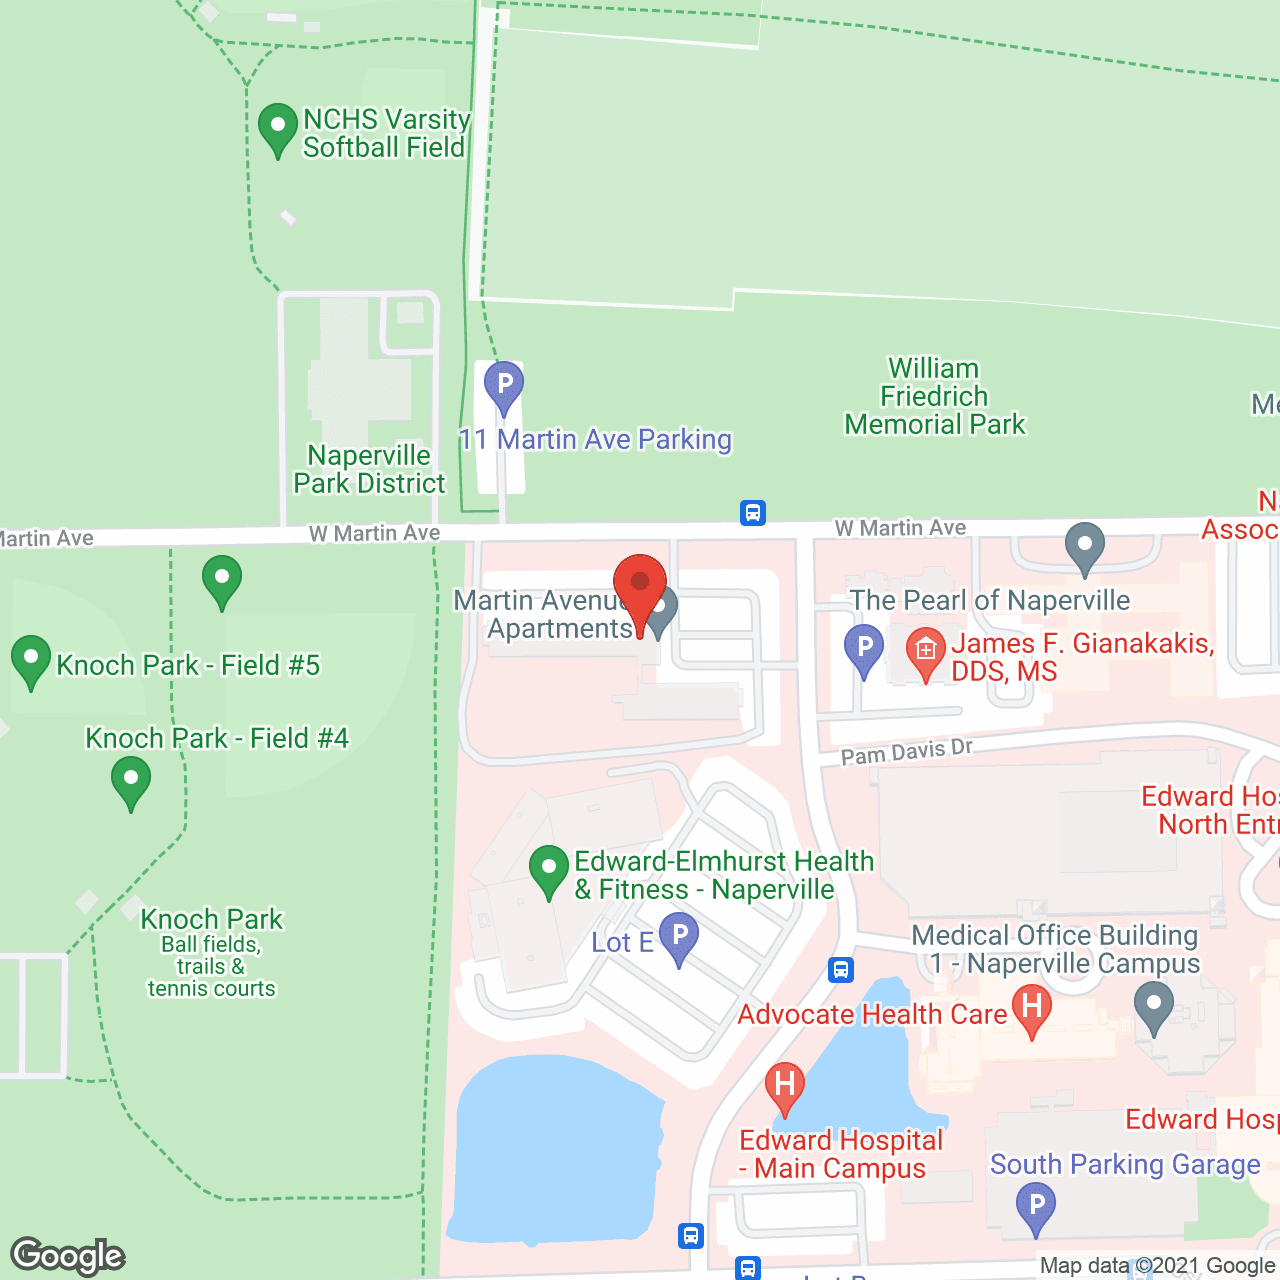 Martin Avenue Apartments in google map